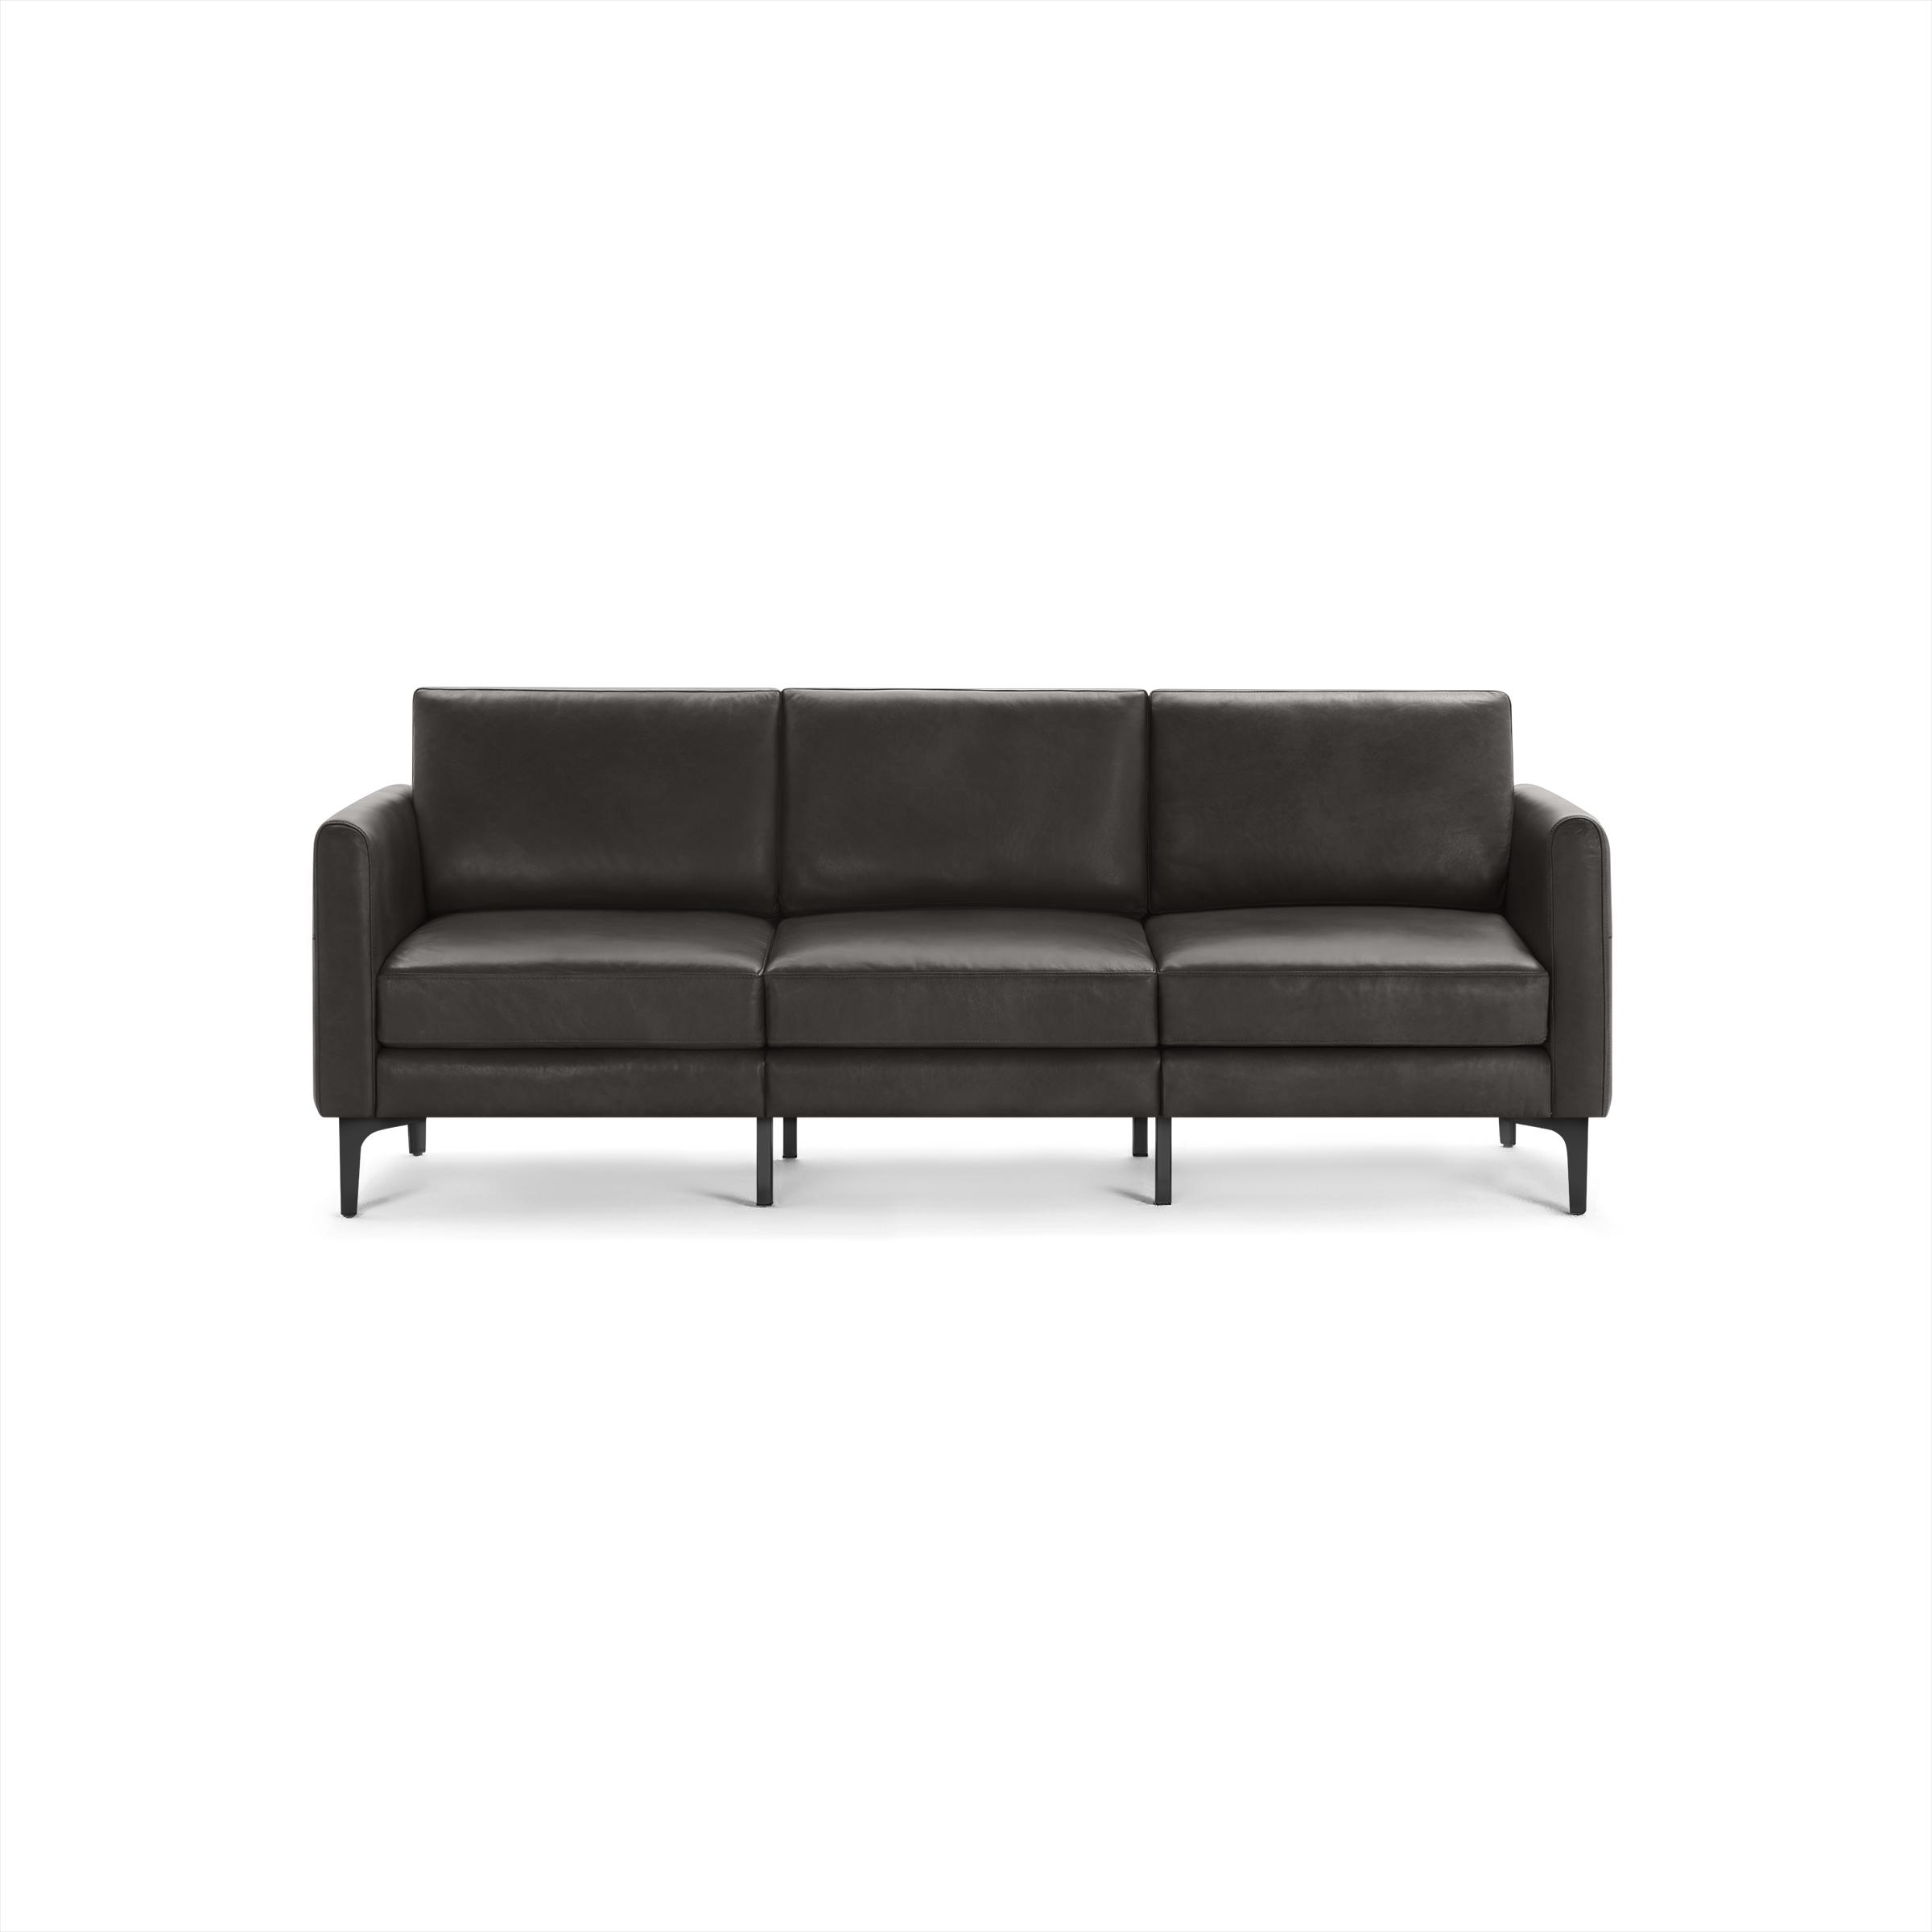 Nomad Leather Sofa in Slate, Black Metal Legs - Image 0